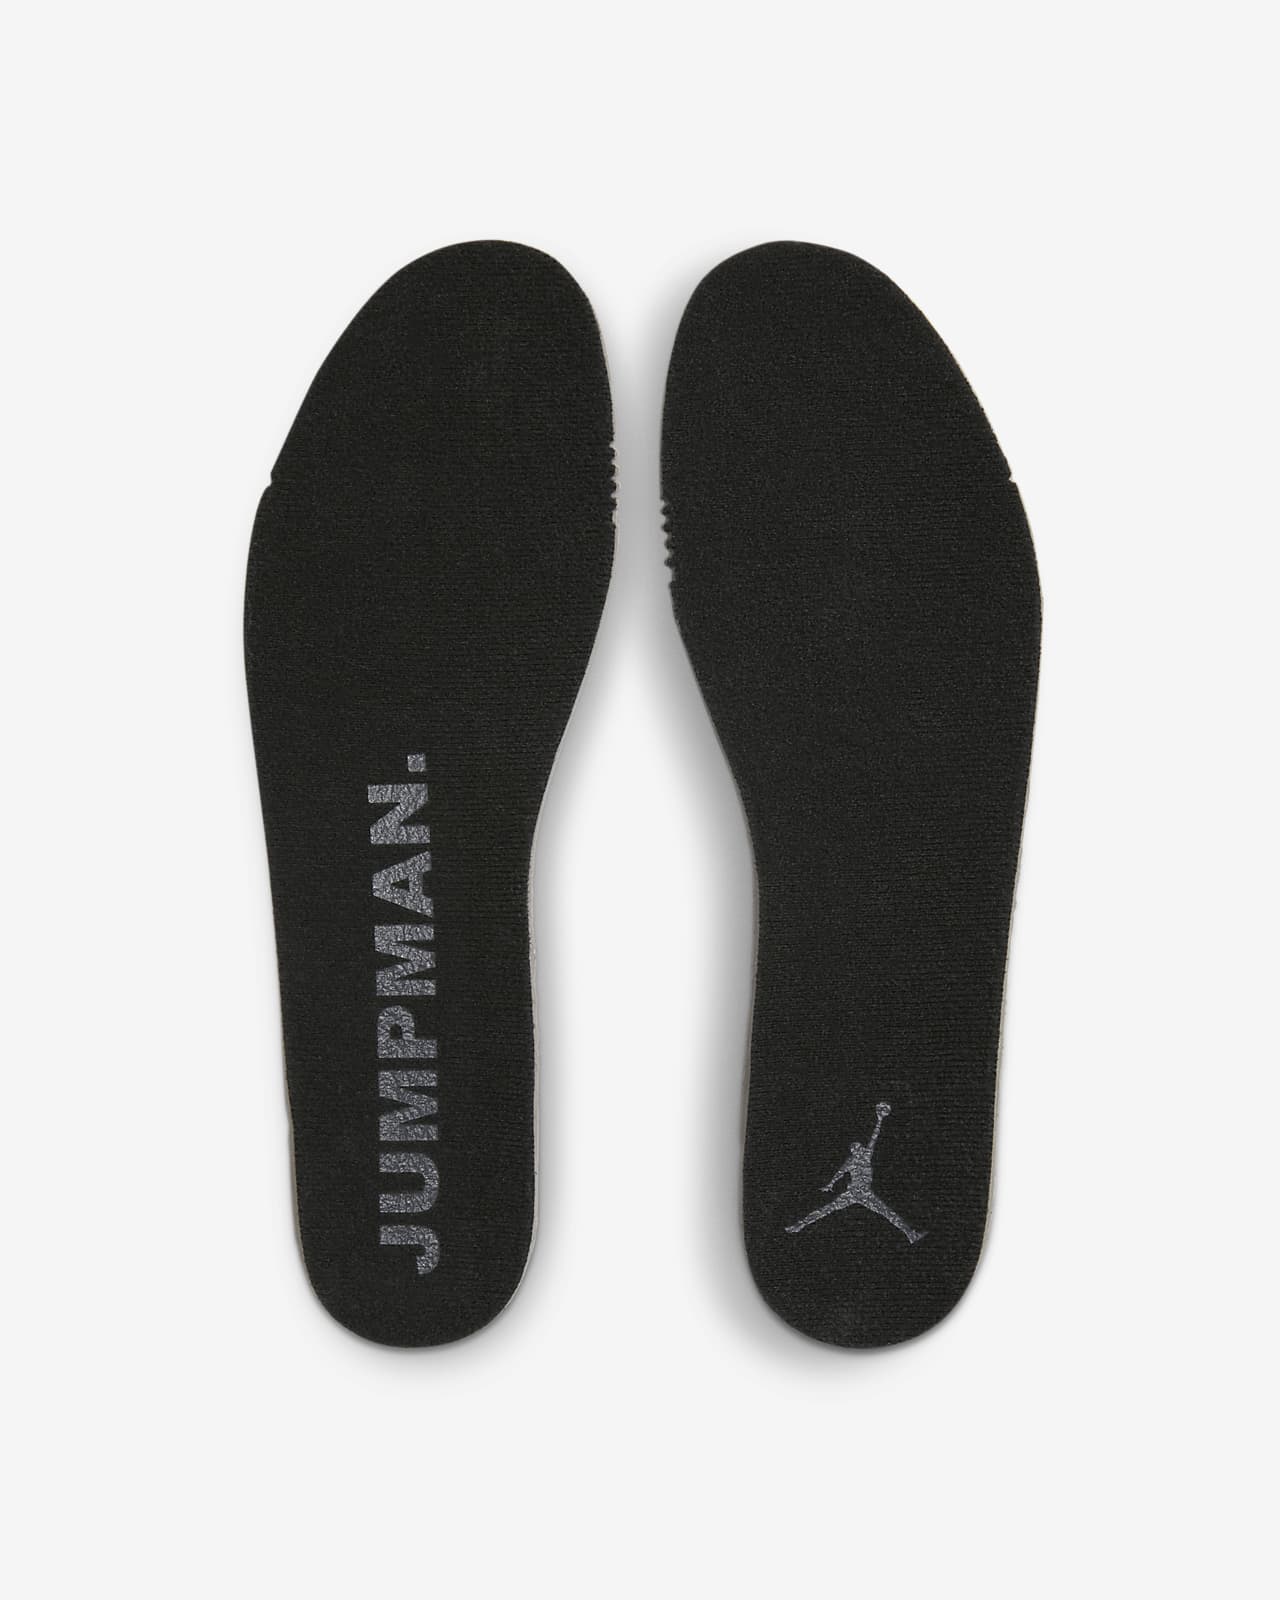 Credo Usando una computadora lanza Jordan Stay Loyal 2 Men's Shoes. Nike.com